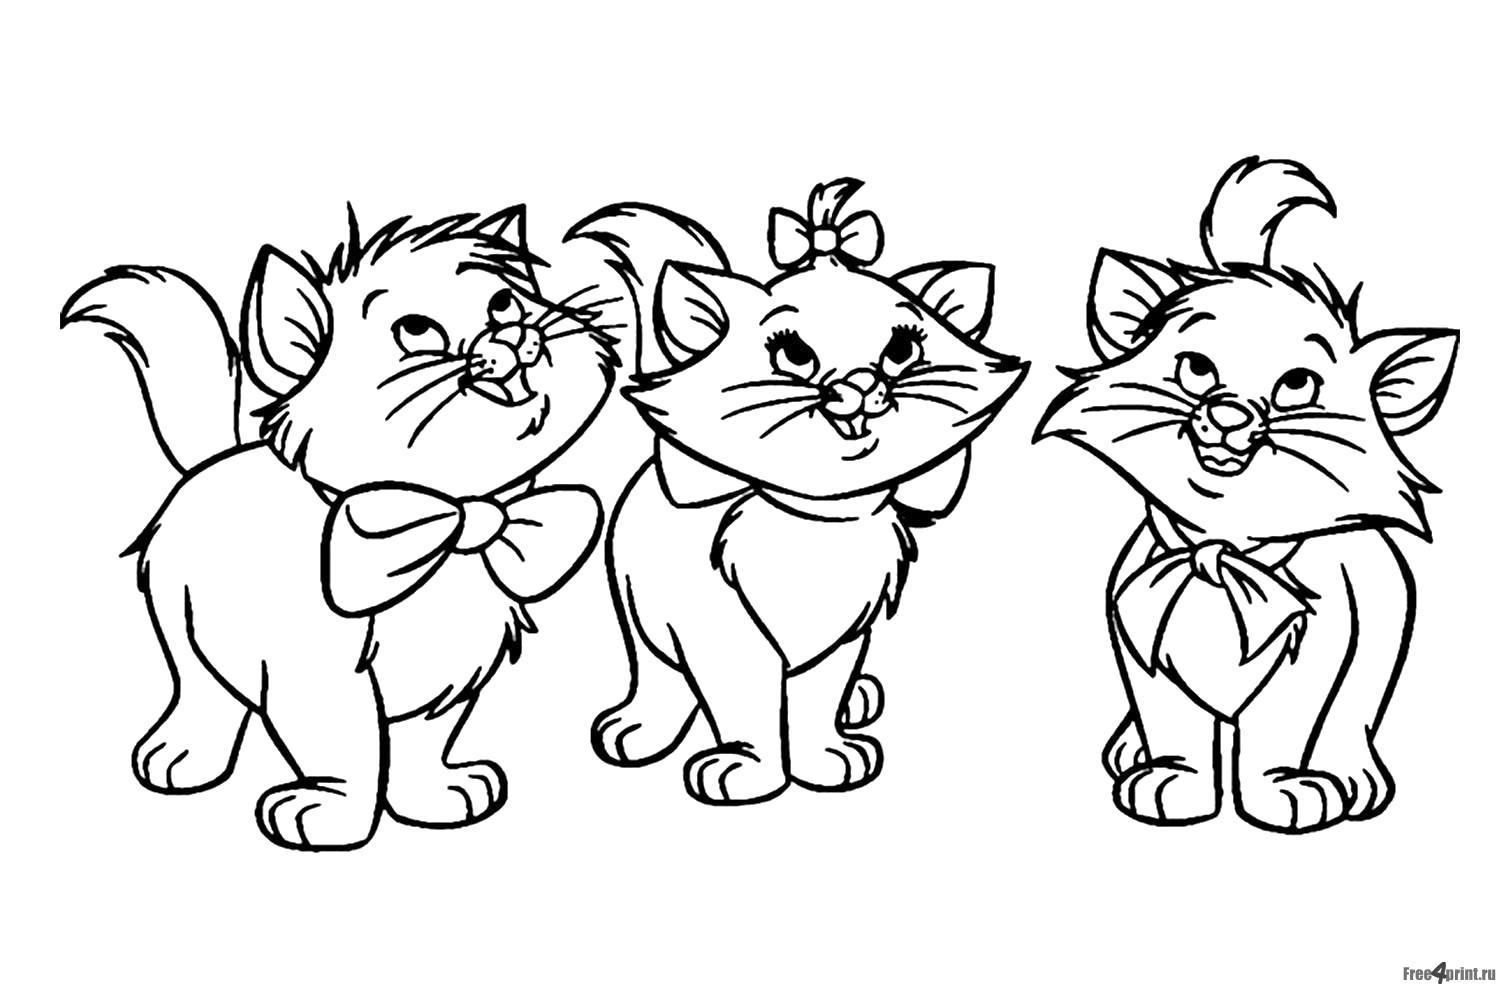 Название: Раскраска Три котенка с бантиками. Категория: Домашние животные. Теги: Котенок.